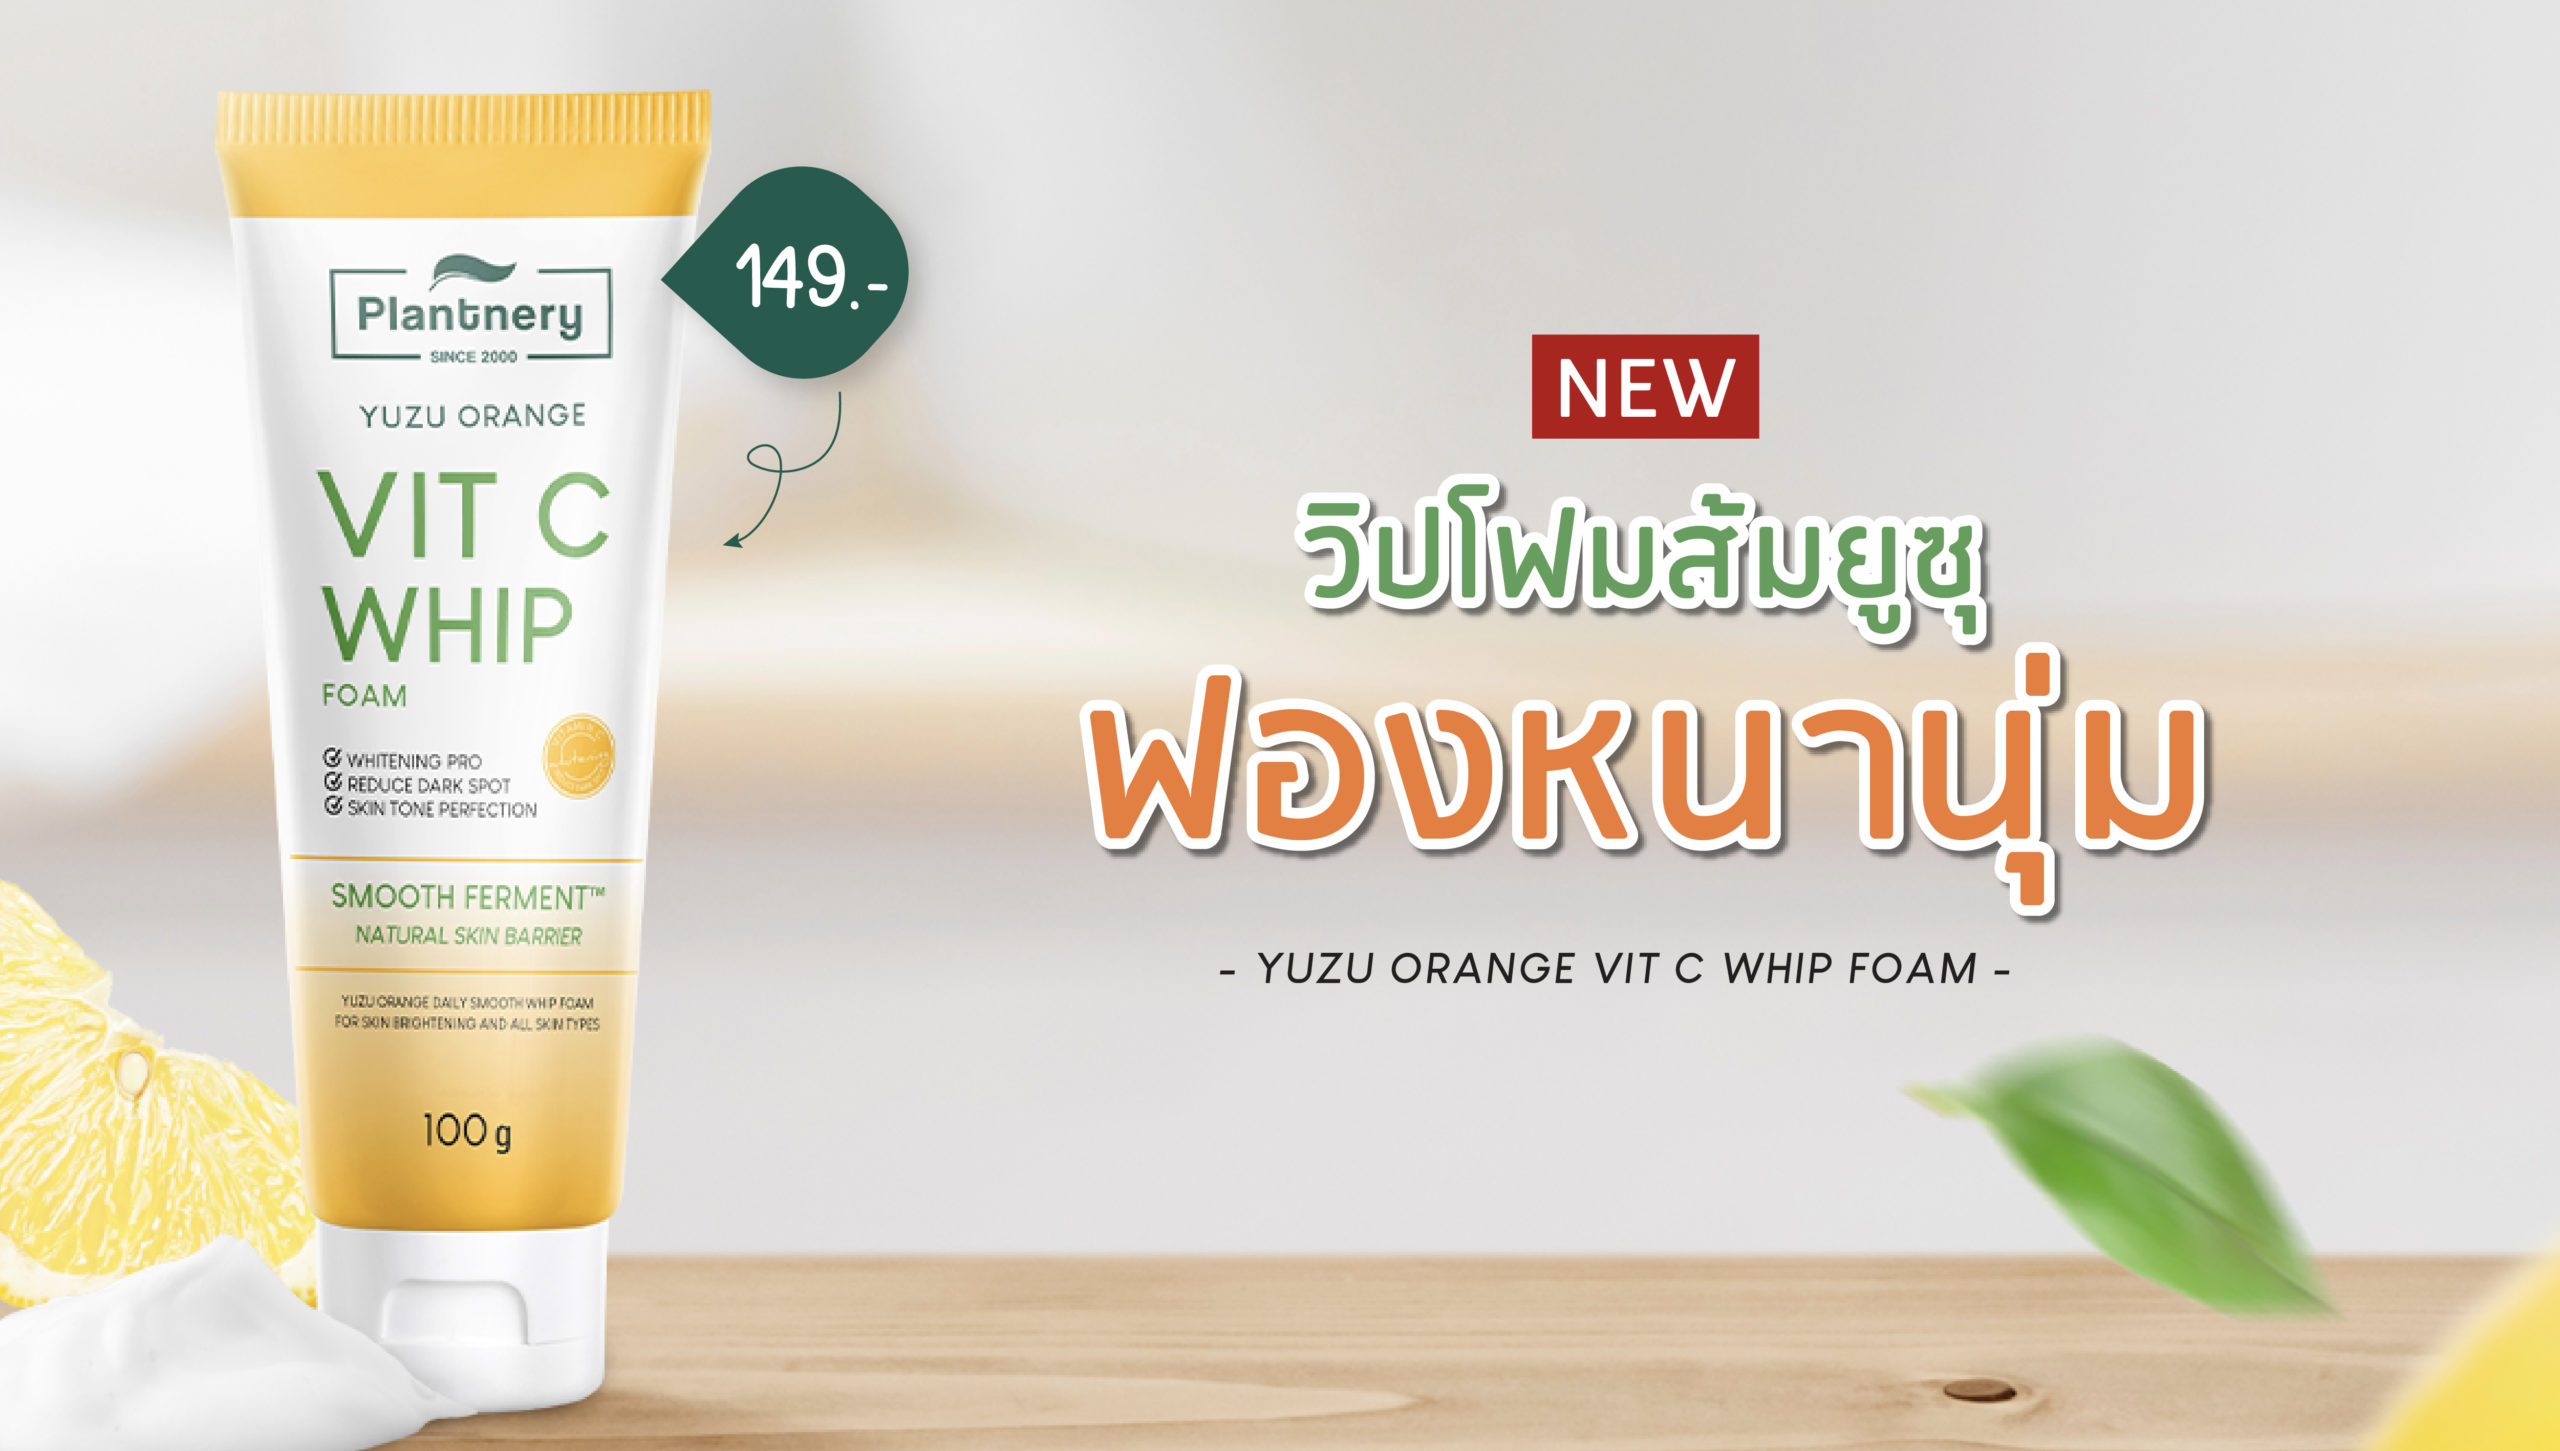 Plantnery Yuzu Orange Vitamin C Whip Foam Mobile TH